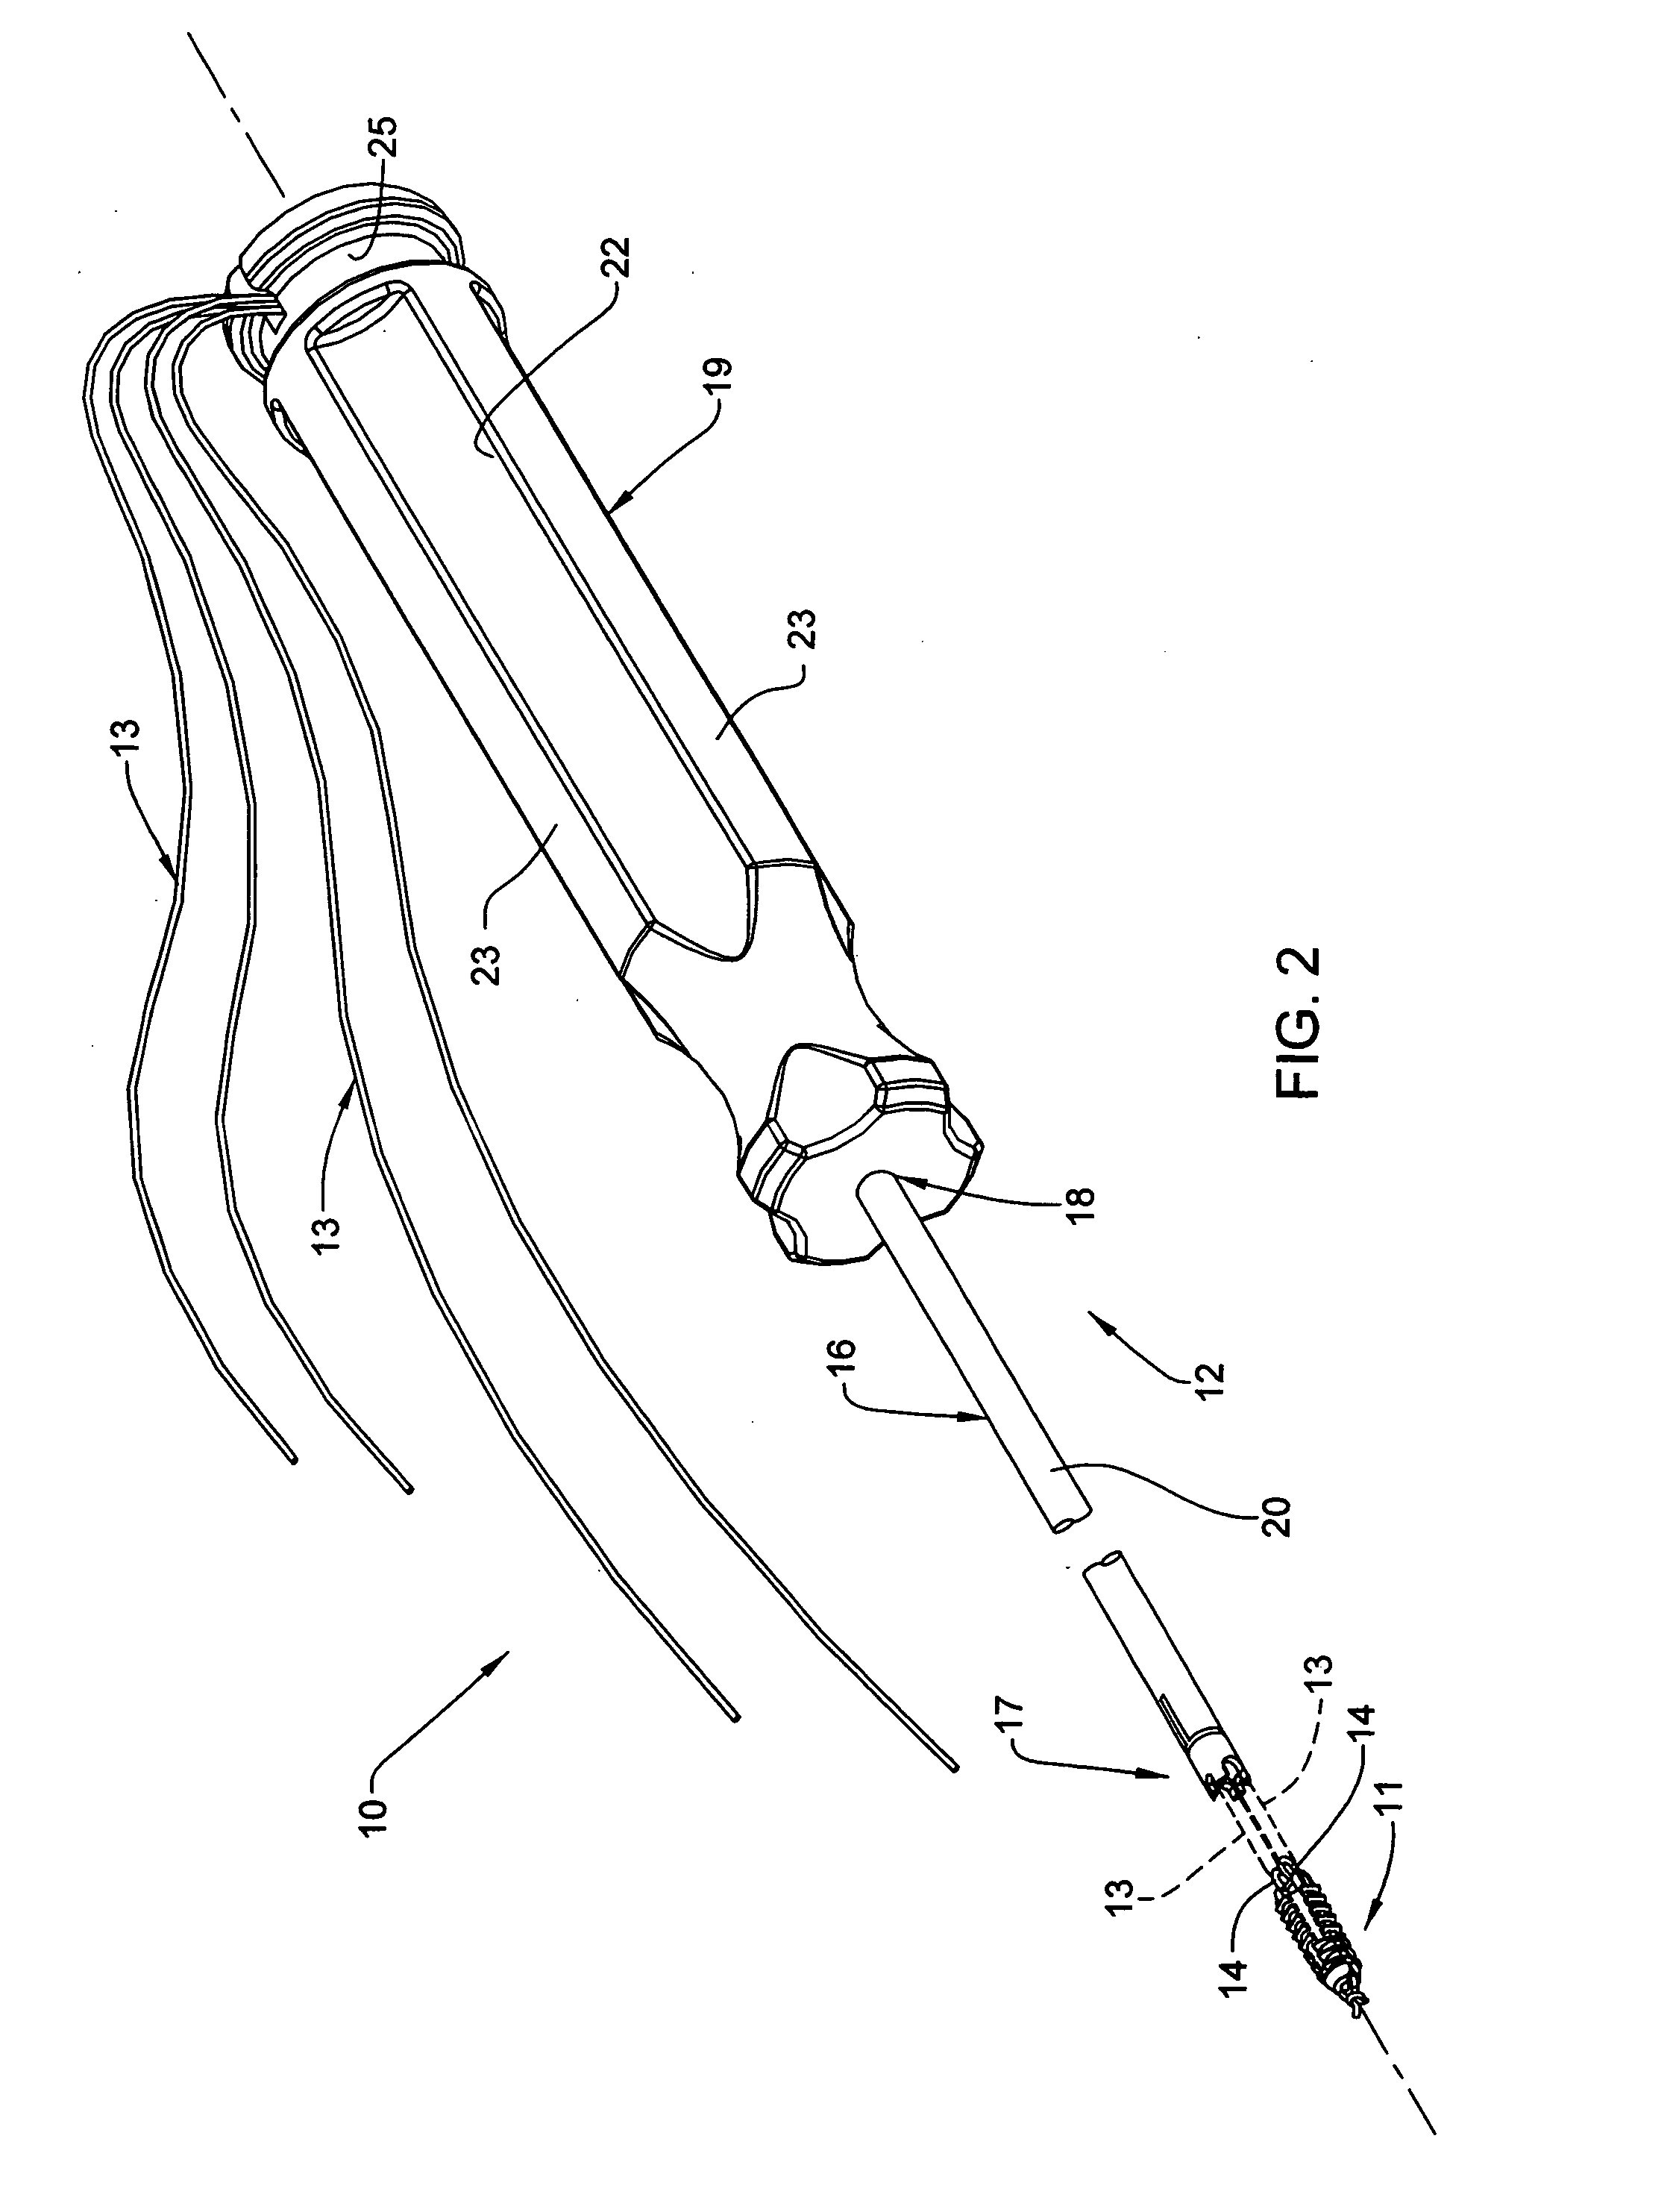 Suture anchor and inserter arrangement